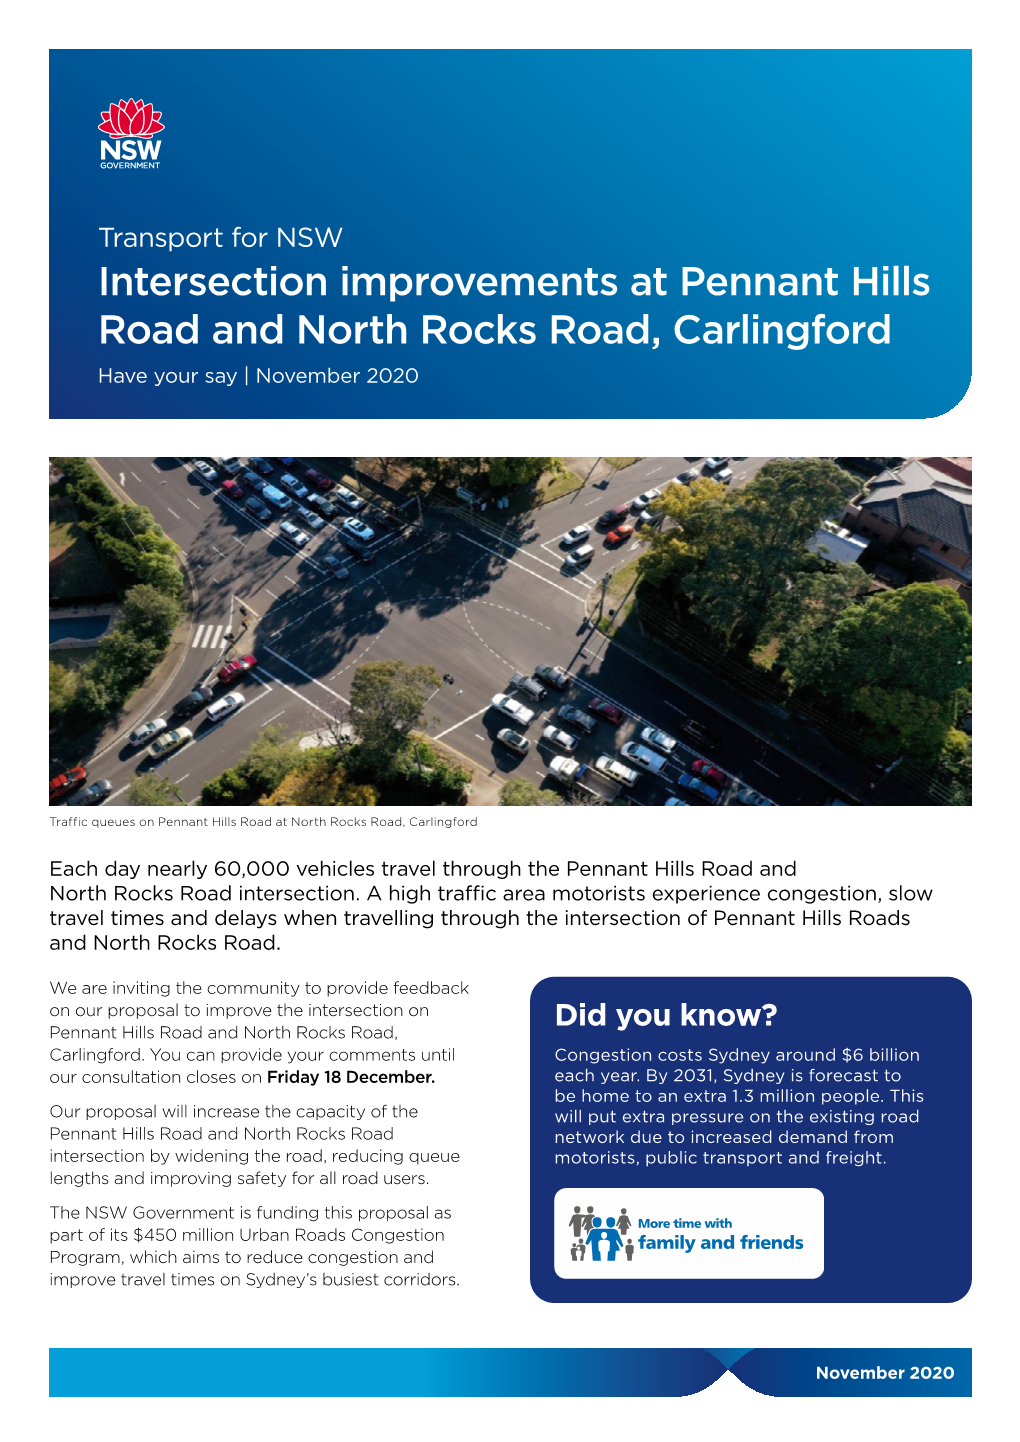 Intersection Improvements at Pennant Hills Road and North Rocks Road, Carlingford Have Your Say | November 2020